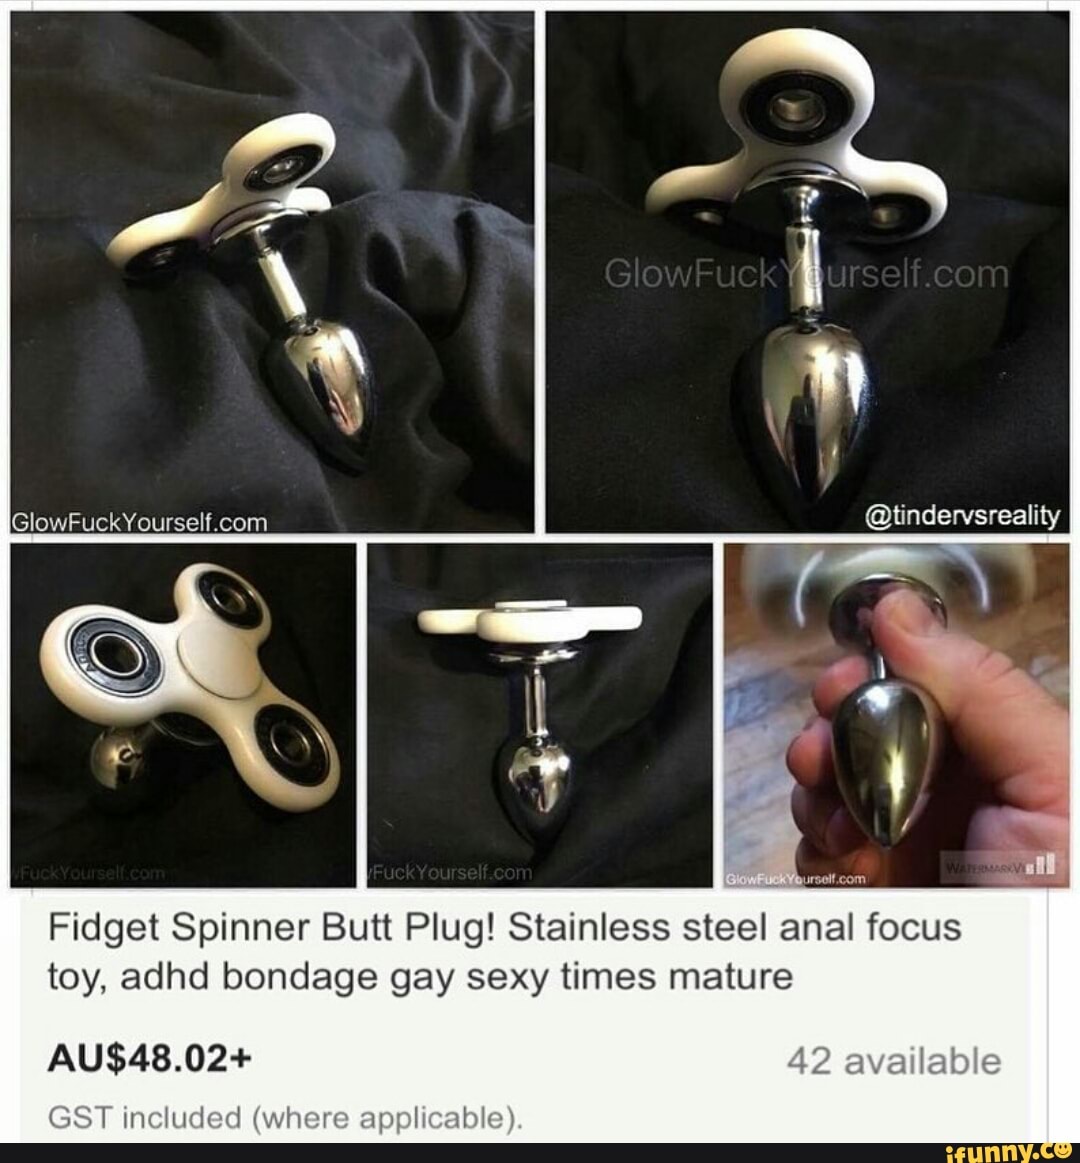 Fidget spinner buttplug